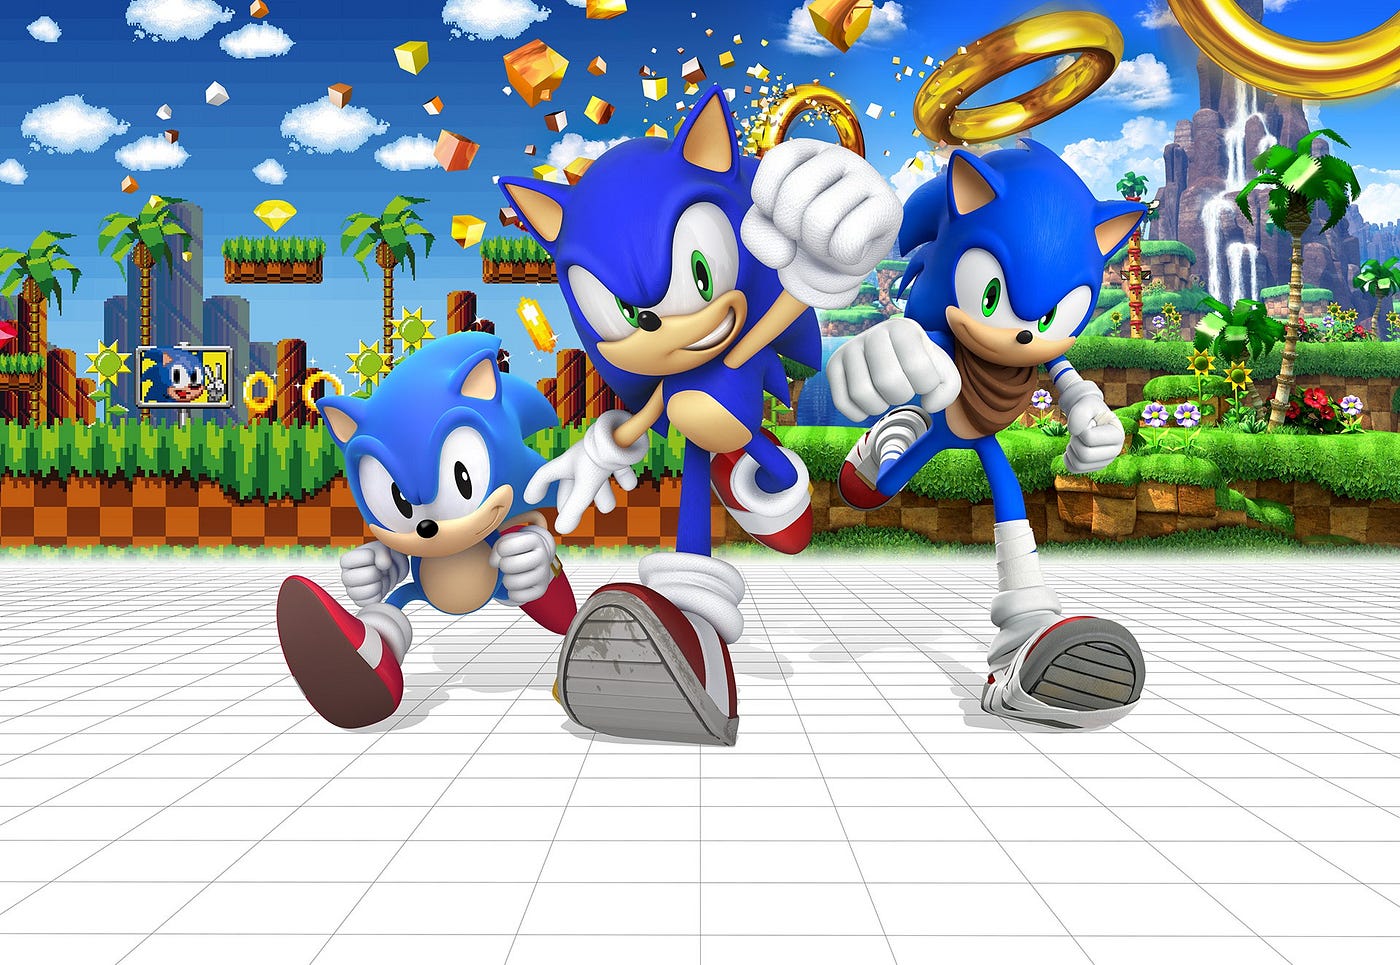 Sonic the Hedgehog 3' is Speeding Back - Inside the Magic